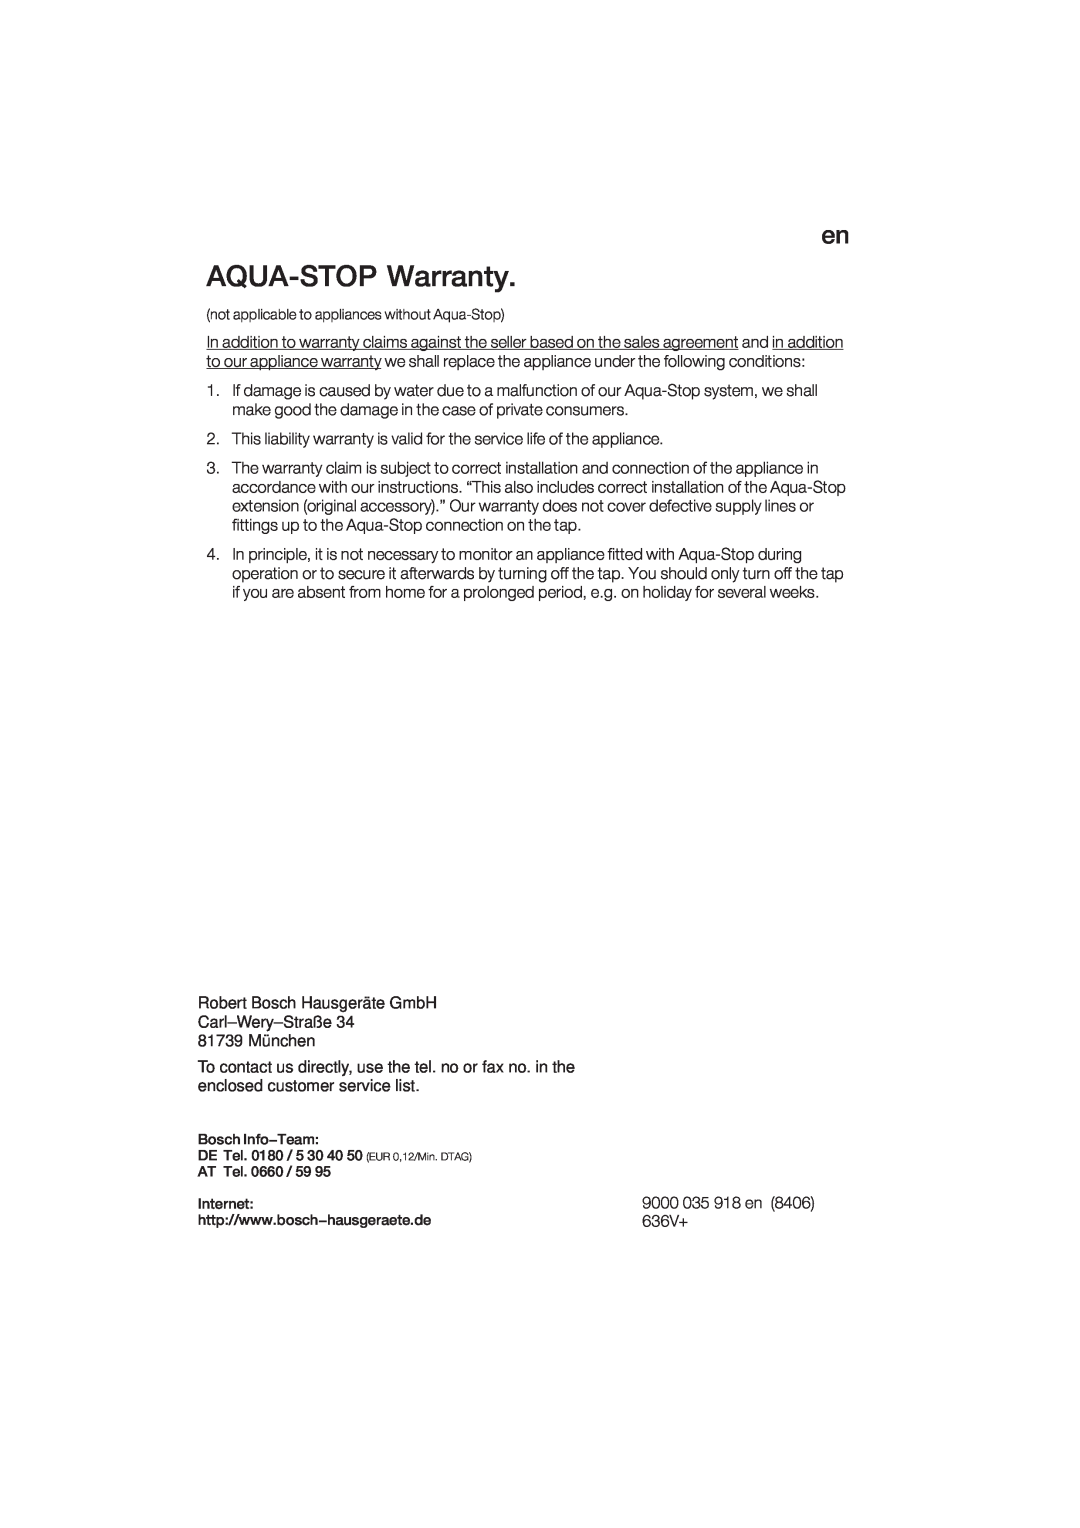 Bosch Appliances 9000 035918 (8406 0) manual Aqua-Stop, Warranty 